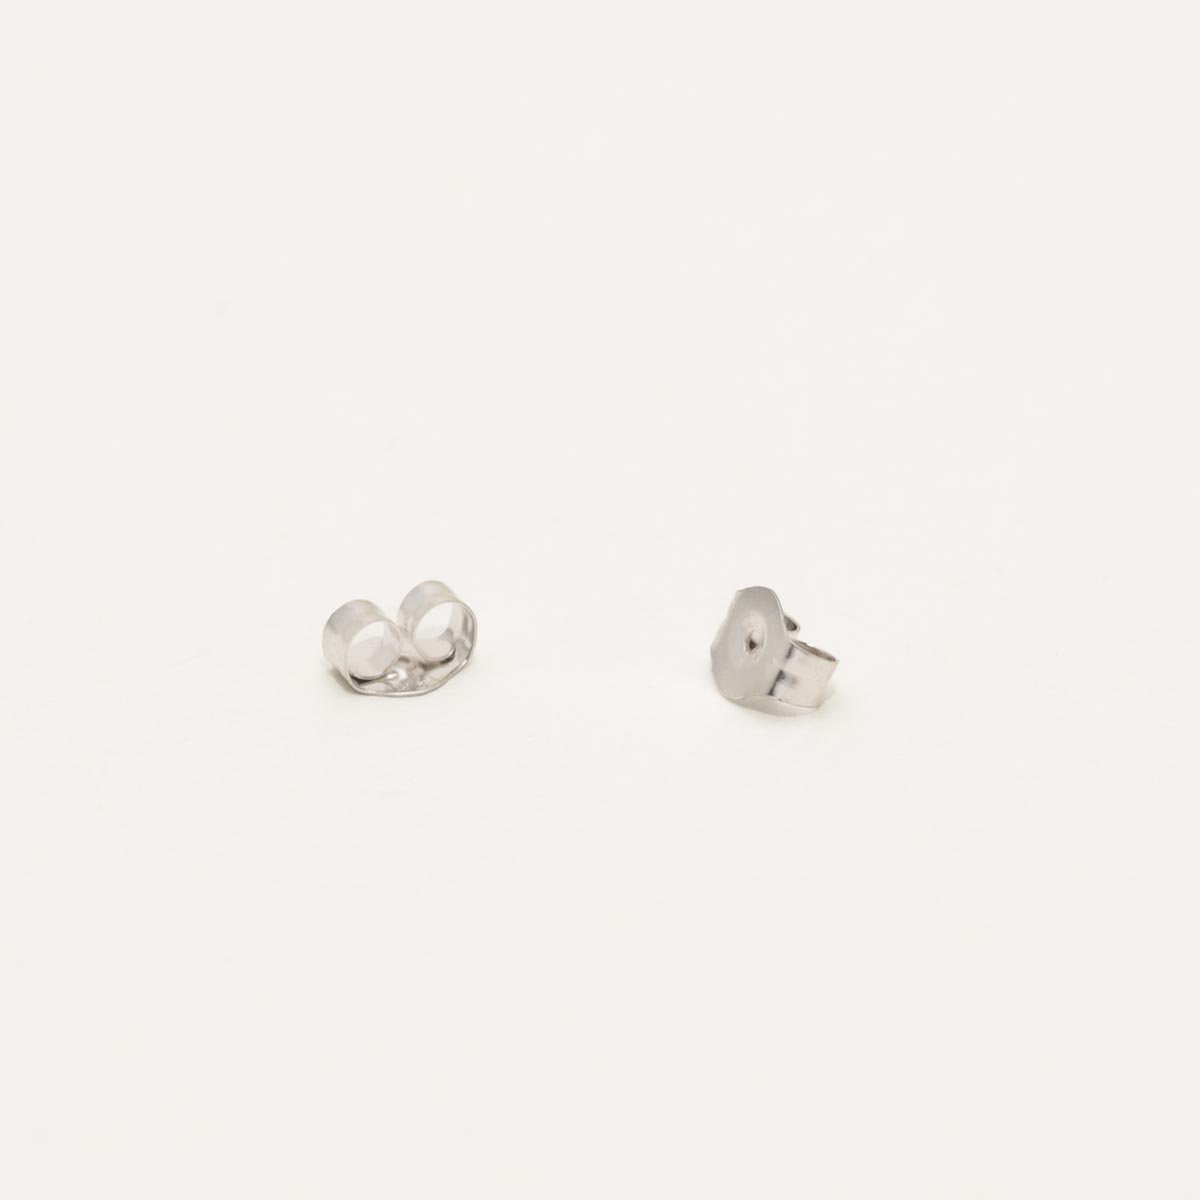 Blue Princess Cut Diamond Stud Earrings in 14kt White Gold (1/4ct tw)